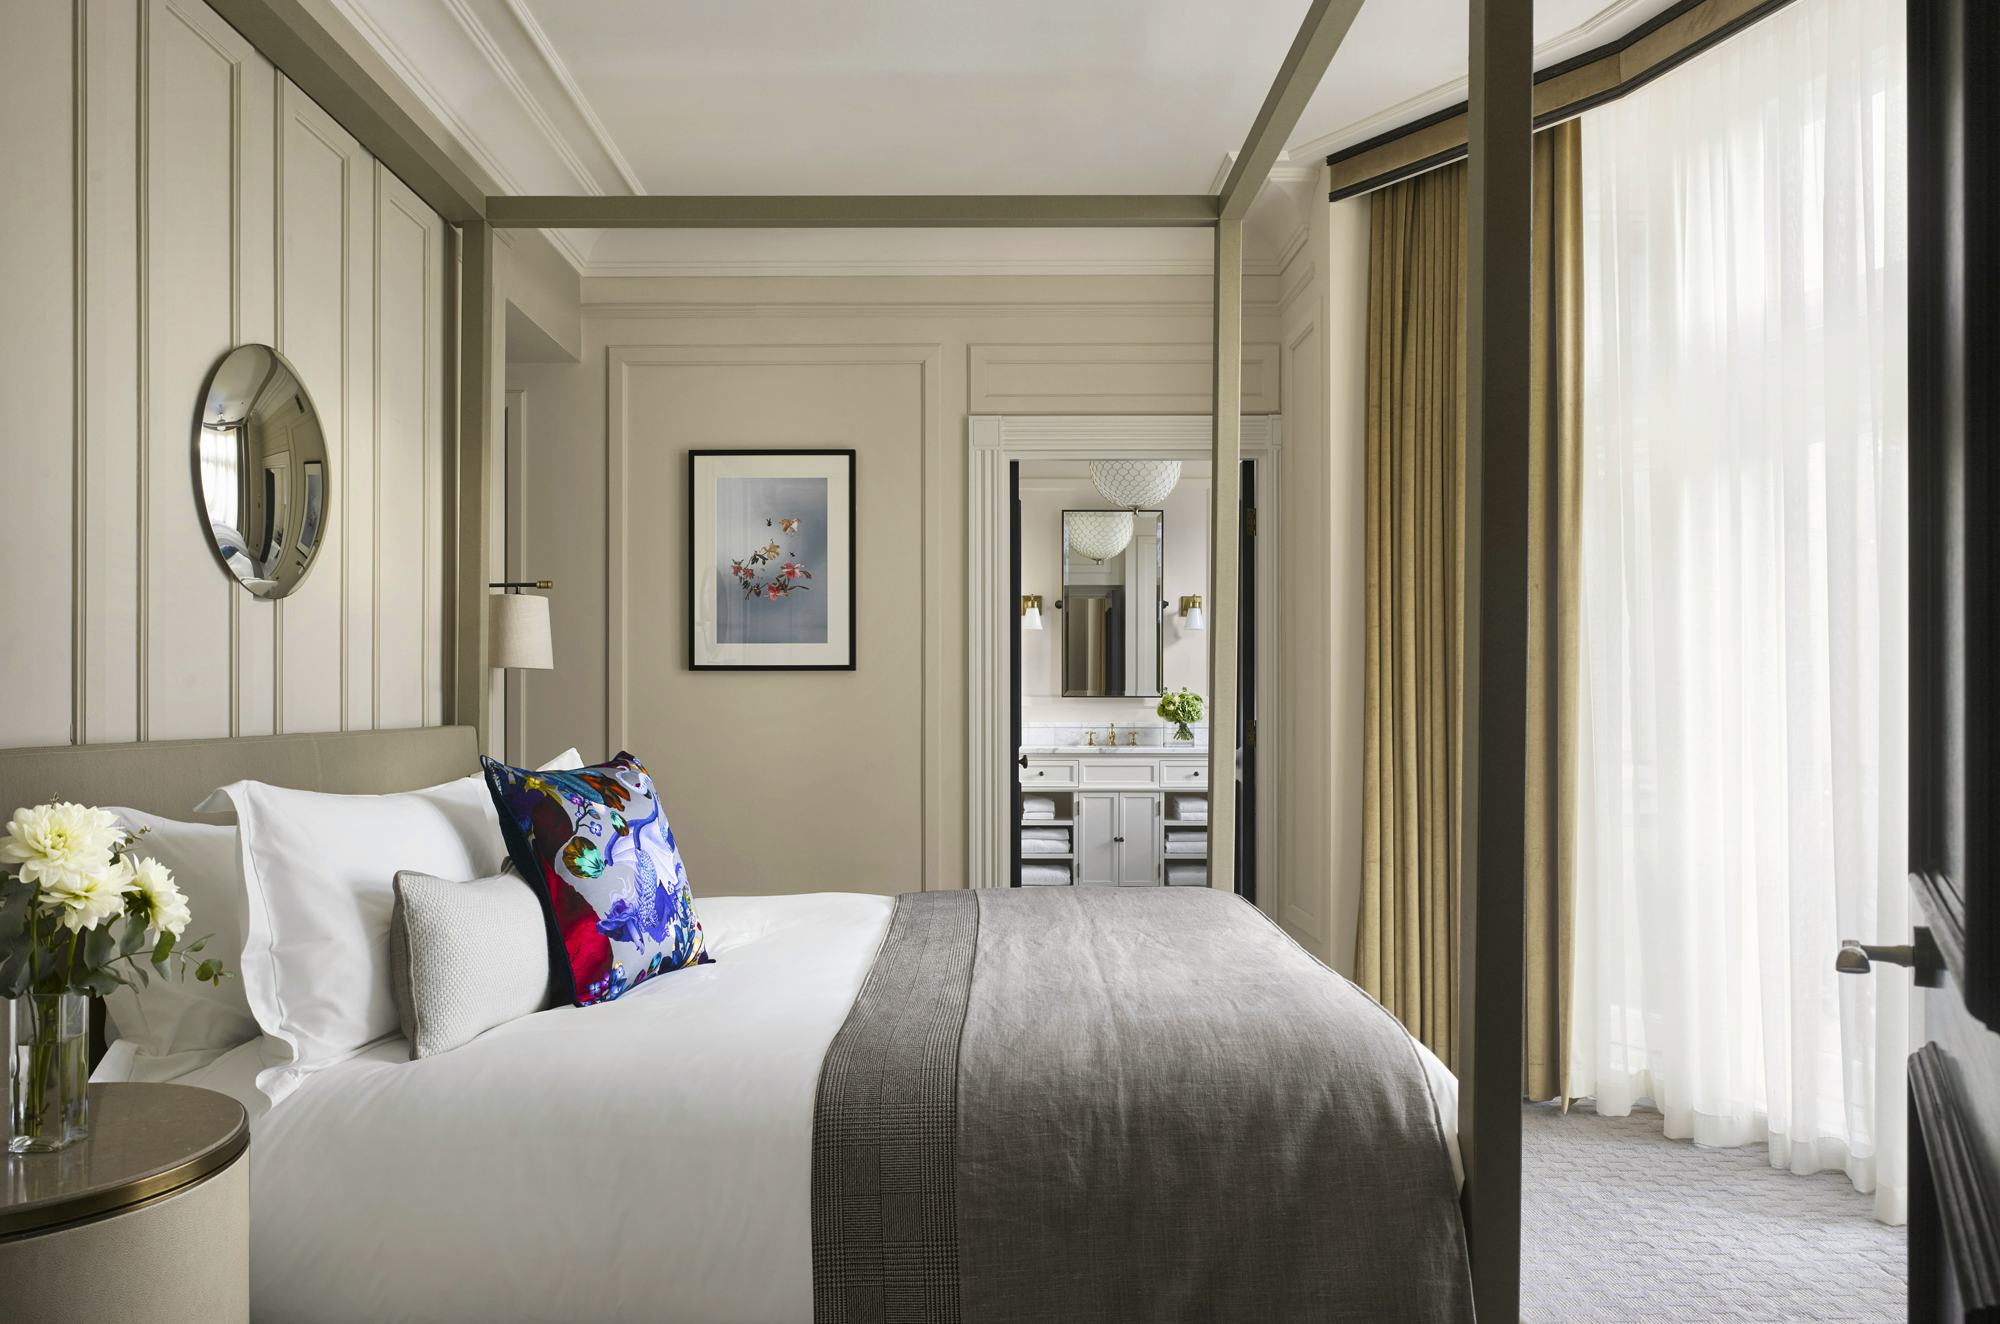 Kimpton Fitzroy London hotels venues luxury designer interiors accomodation rooms suites